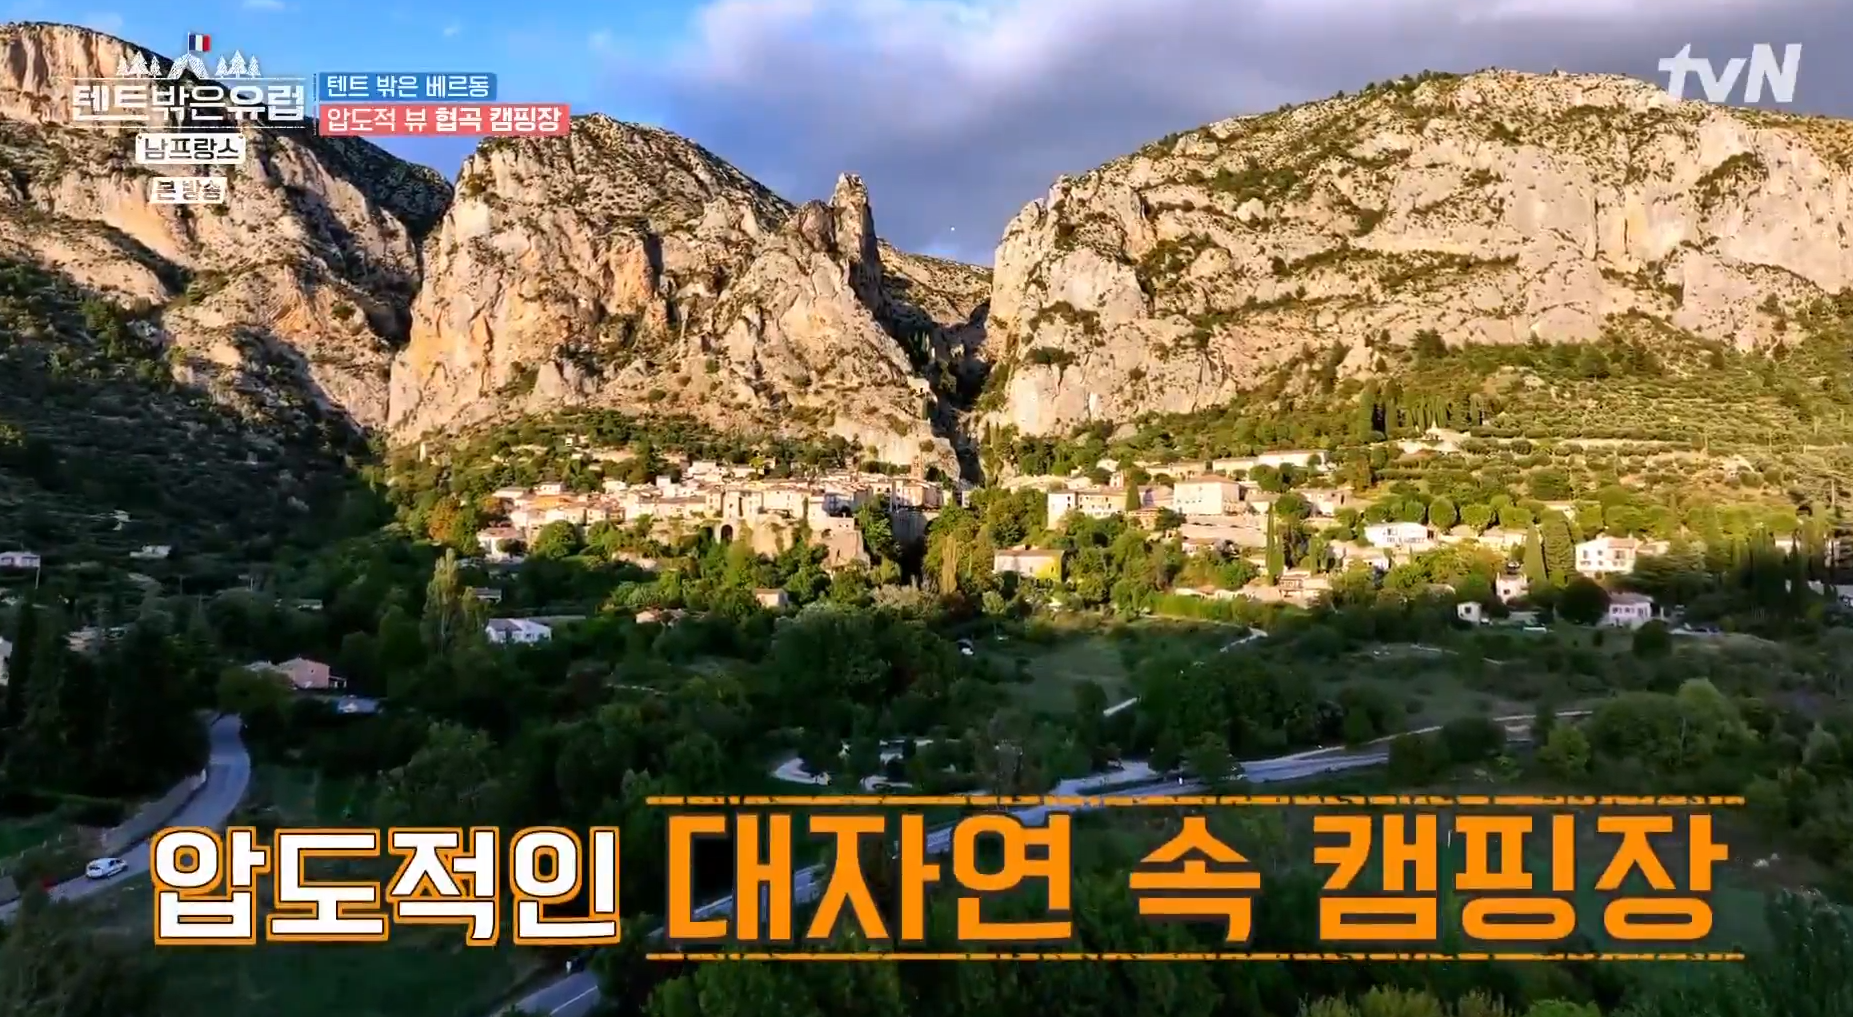 tvN &#39;텐트 밖은 유럽 - 남프랑스 편&#39; 1화&#44; 베르동 협곡 아래 대자연 속의 캠핑장